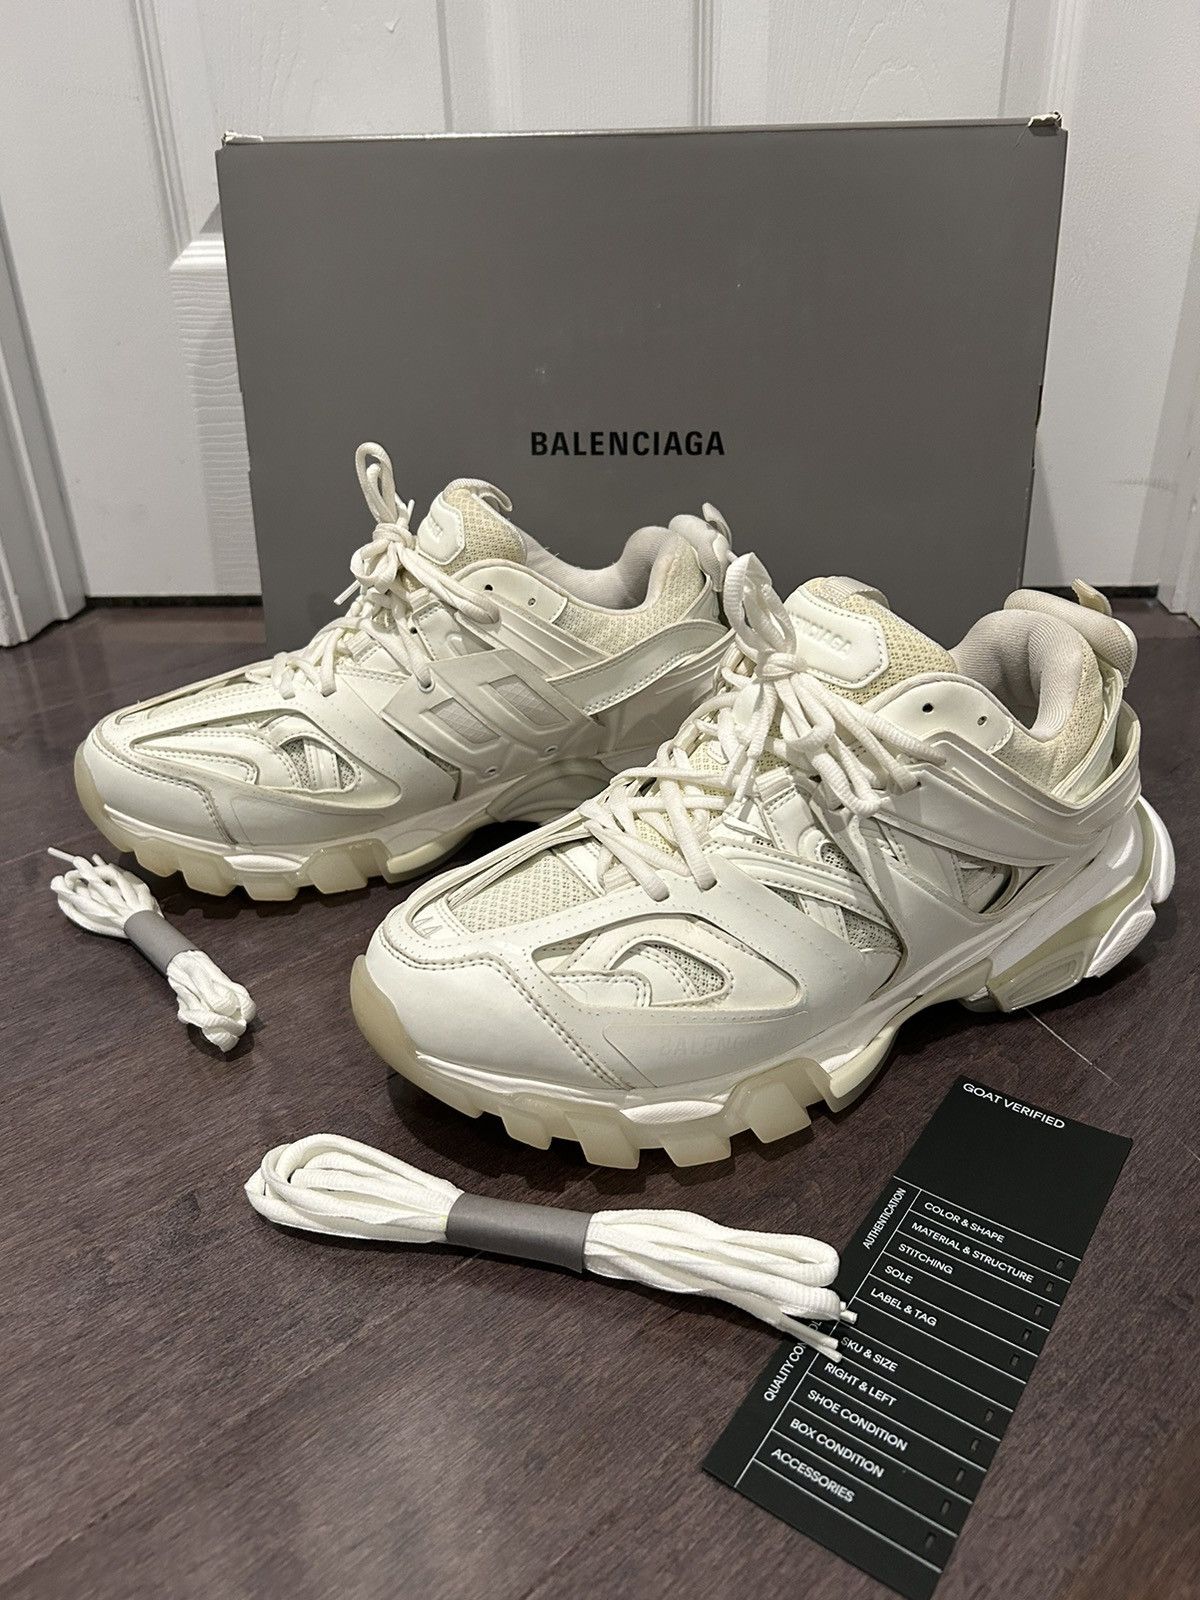 Balenciaga Balenciaga track white GLOW IN DARK og all size 44 | Grailed